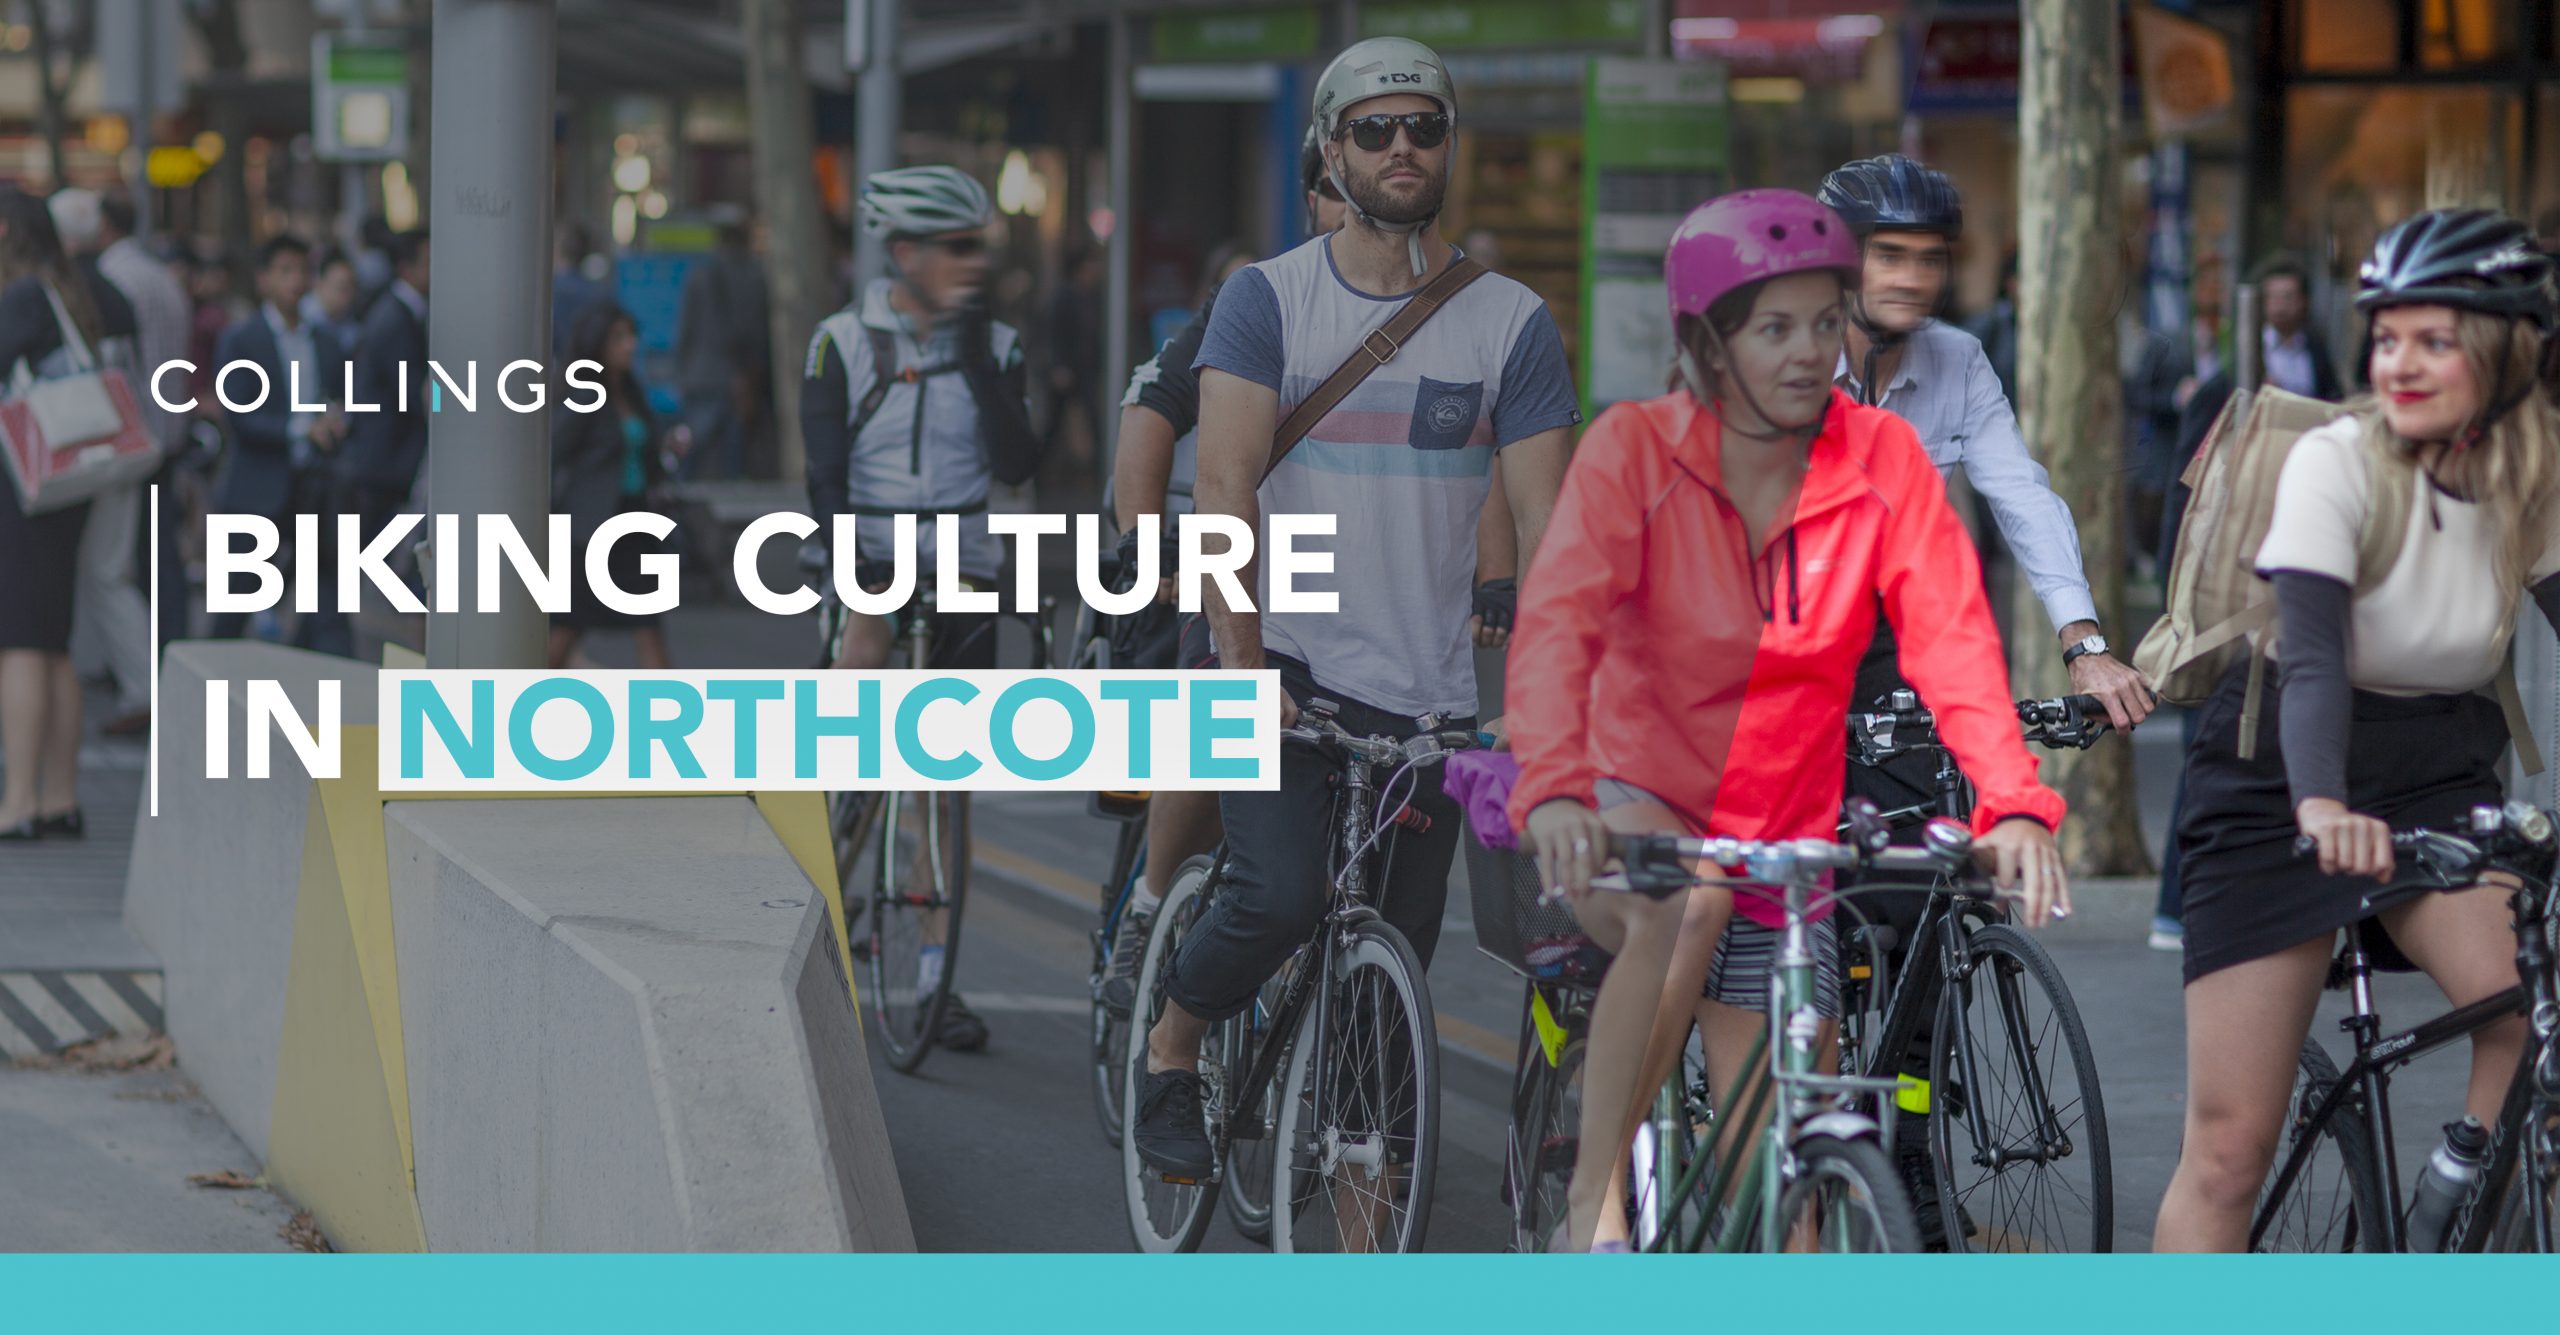 Biking culture in Northcote